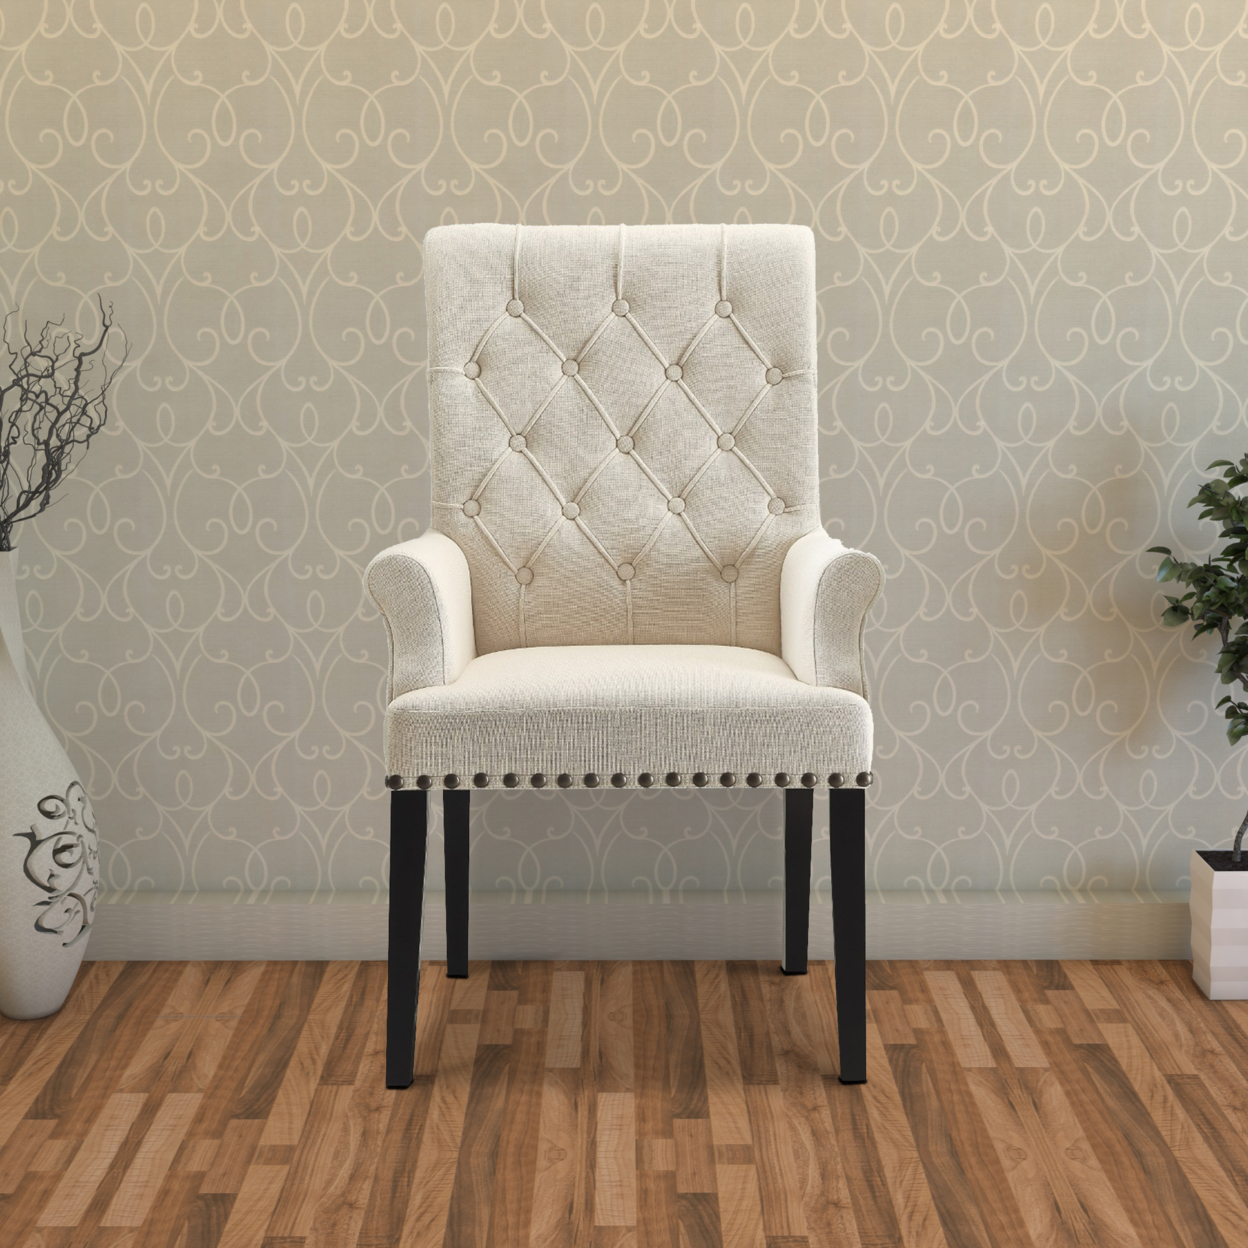 Diamond Tufted Upholstered Dining Chair, Cream & Smokey Black- Saltoro Sherpi